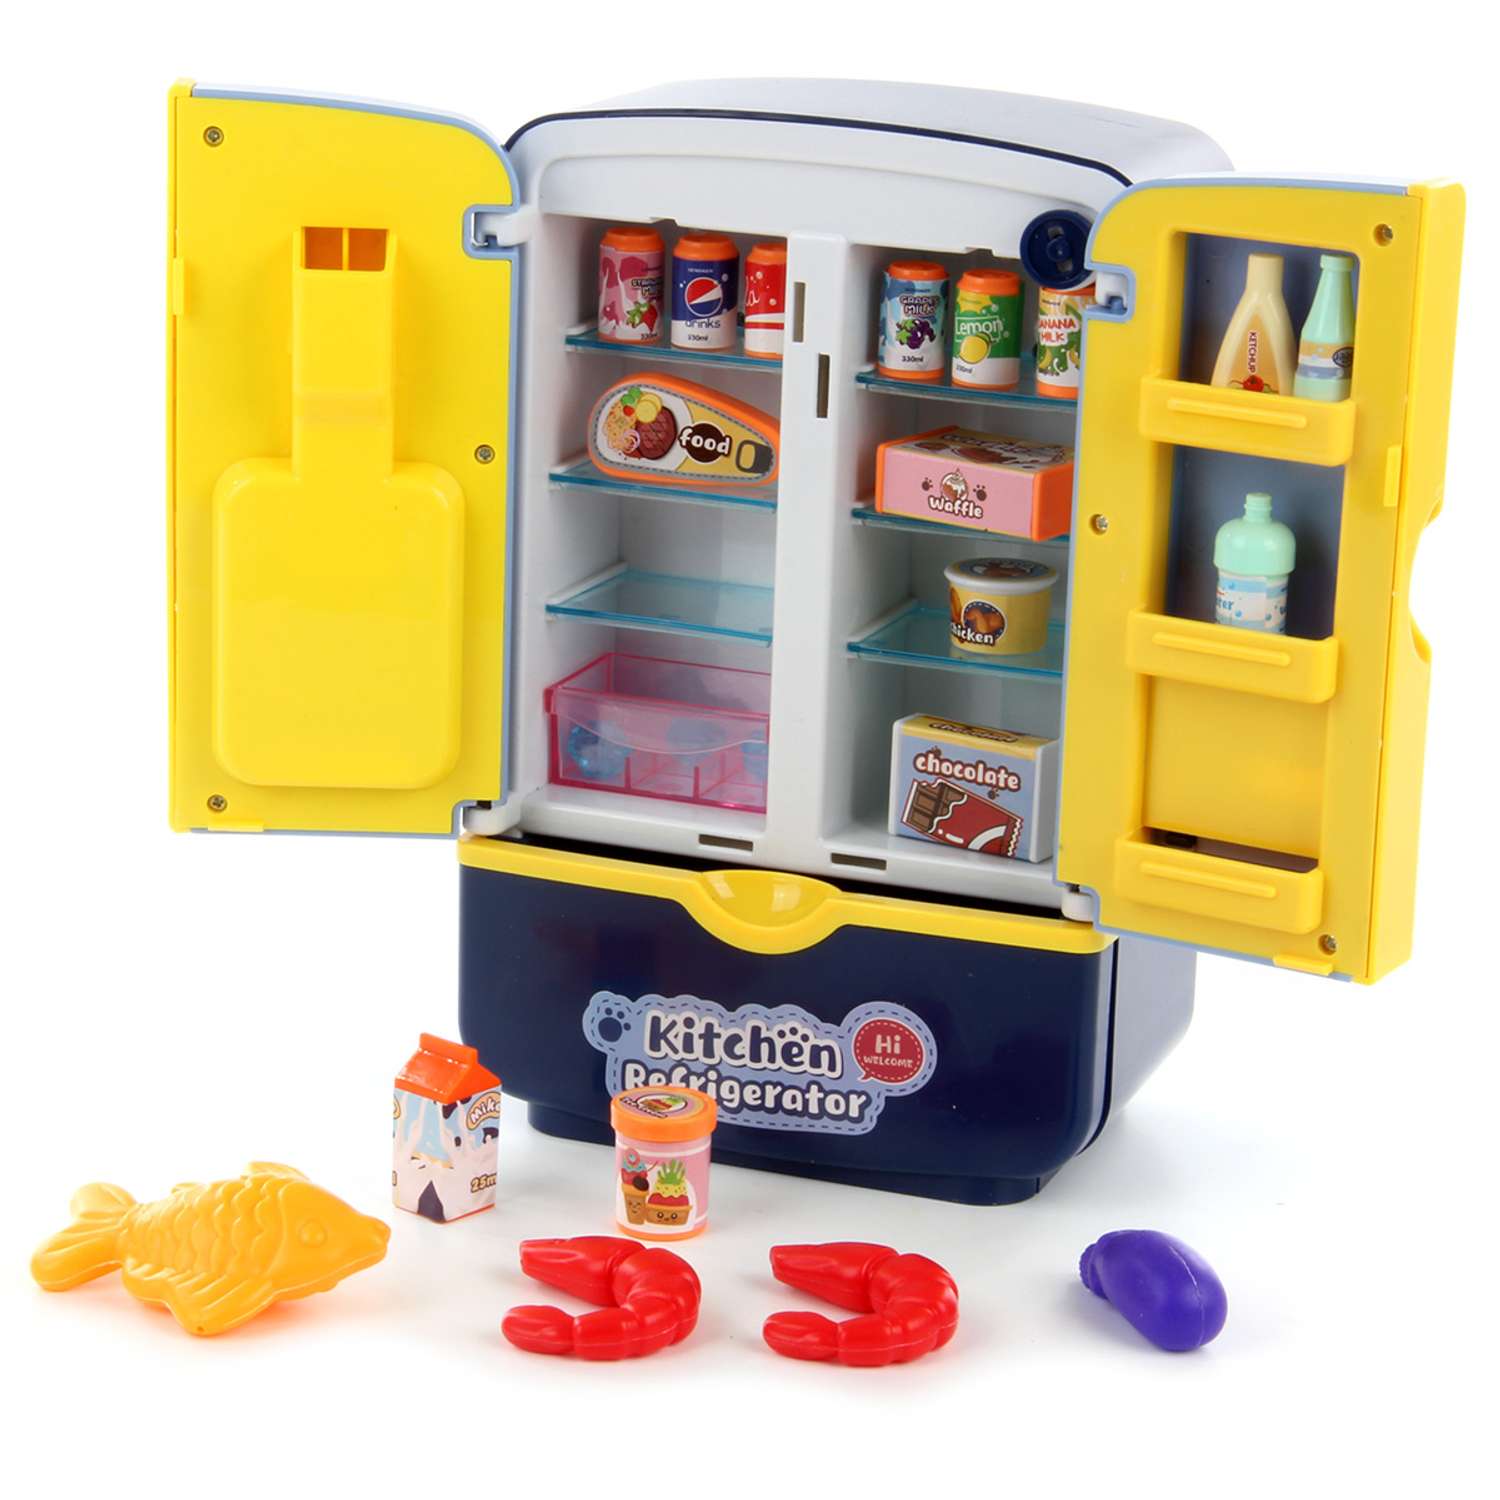 Холодильник Veld Co развивающие игрушки свет звуки песни подача льда еда имитация - фото 1